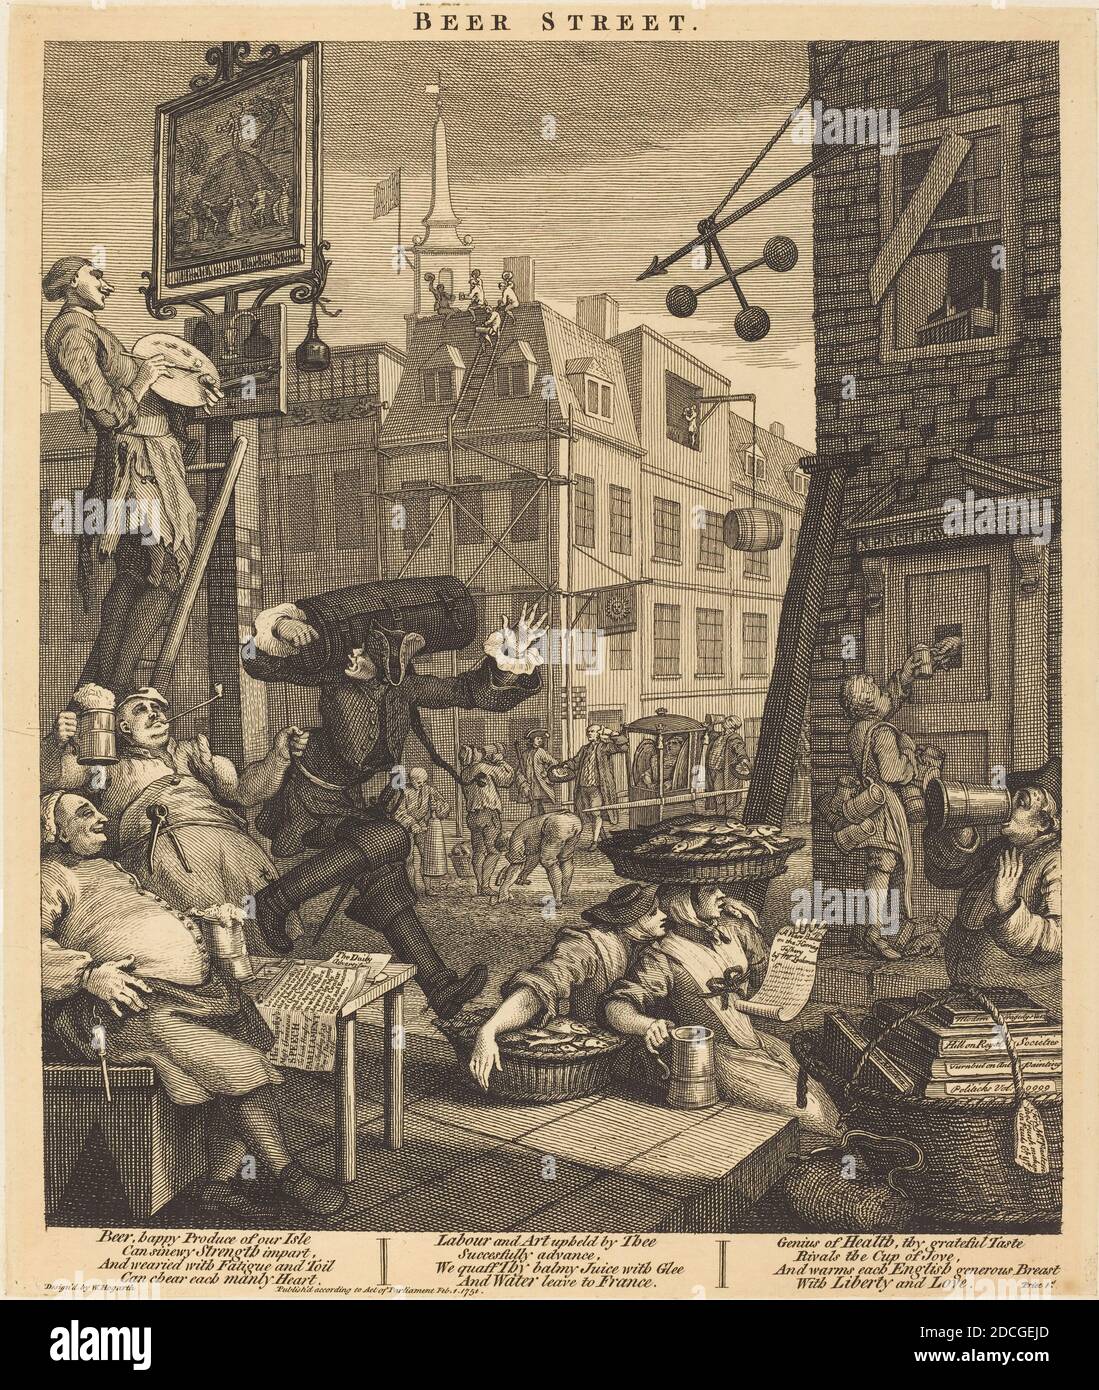 William Hogarth, (artiste), anglais, 1697 - 1764, rue Beer, rue Beer et Gin Lane, (série), 1751, gravure et gravure Banque D'Images